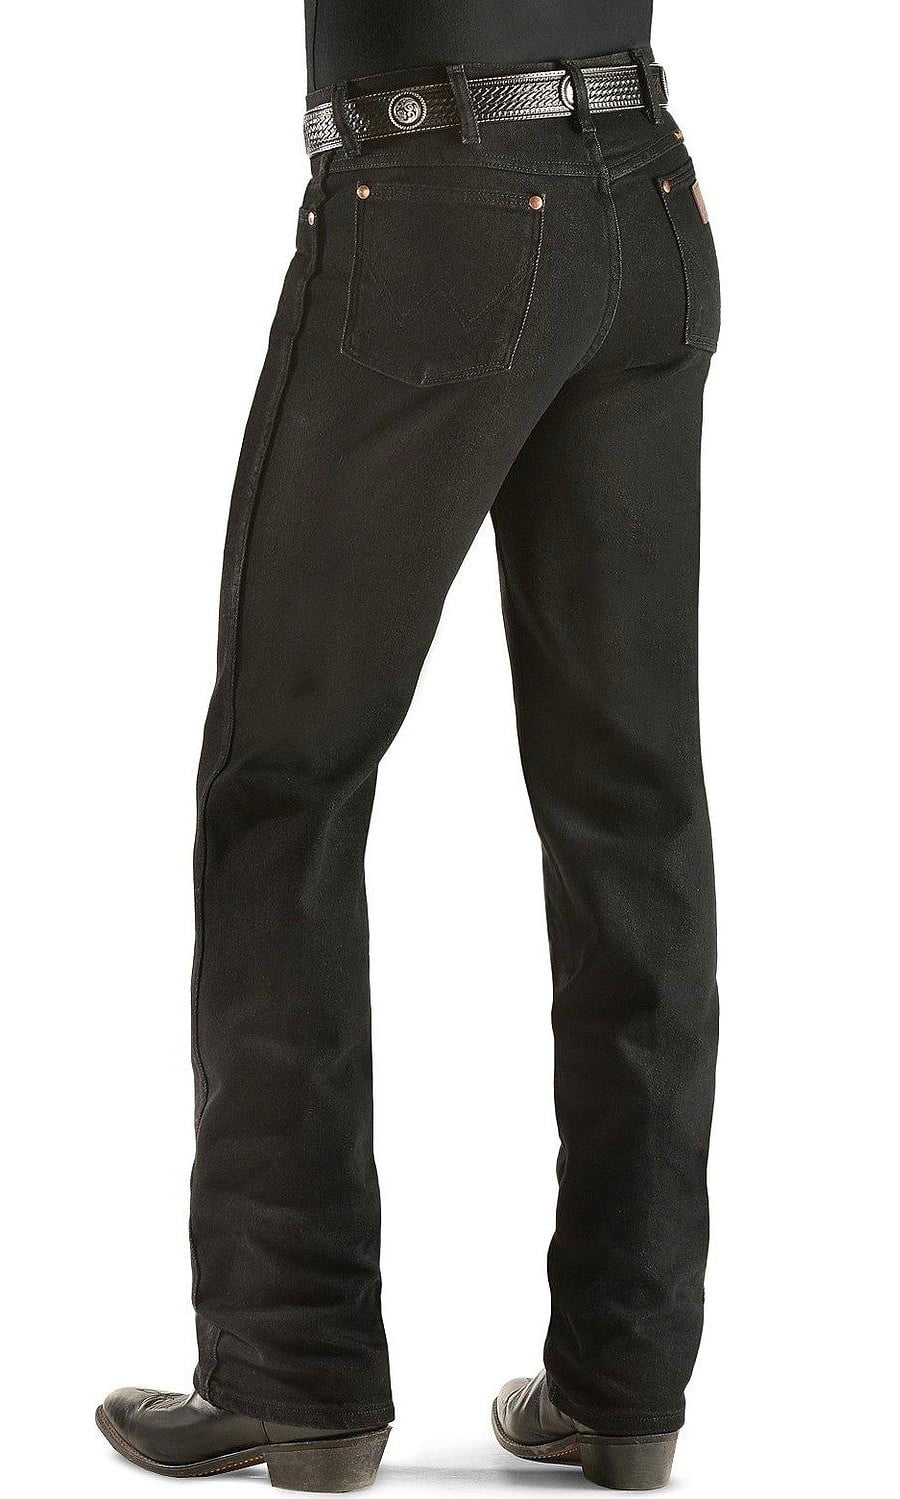 wrangler men's cowboy cut slim fit jean,black stretch,32x36 - Walmart.com